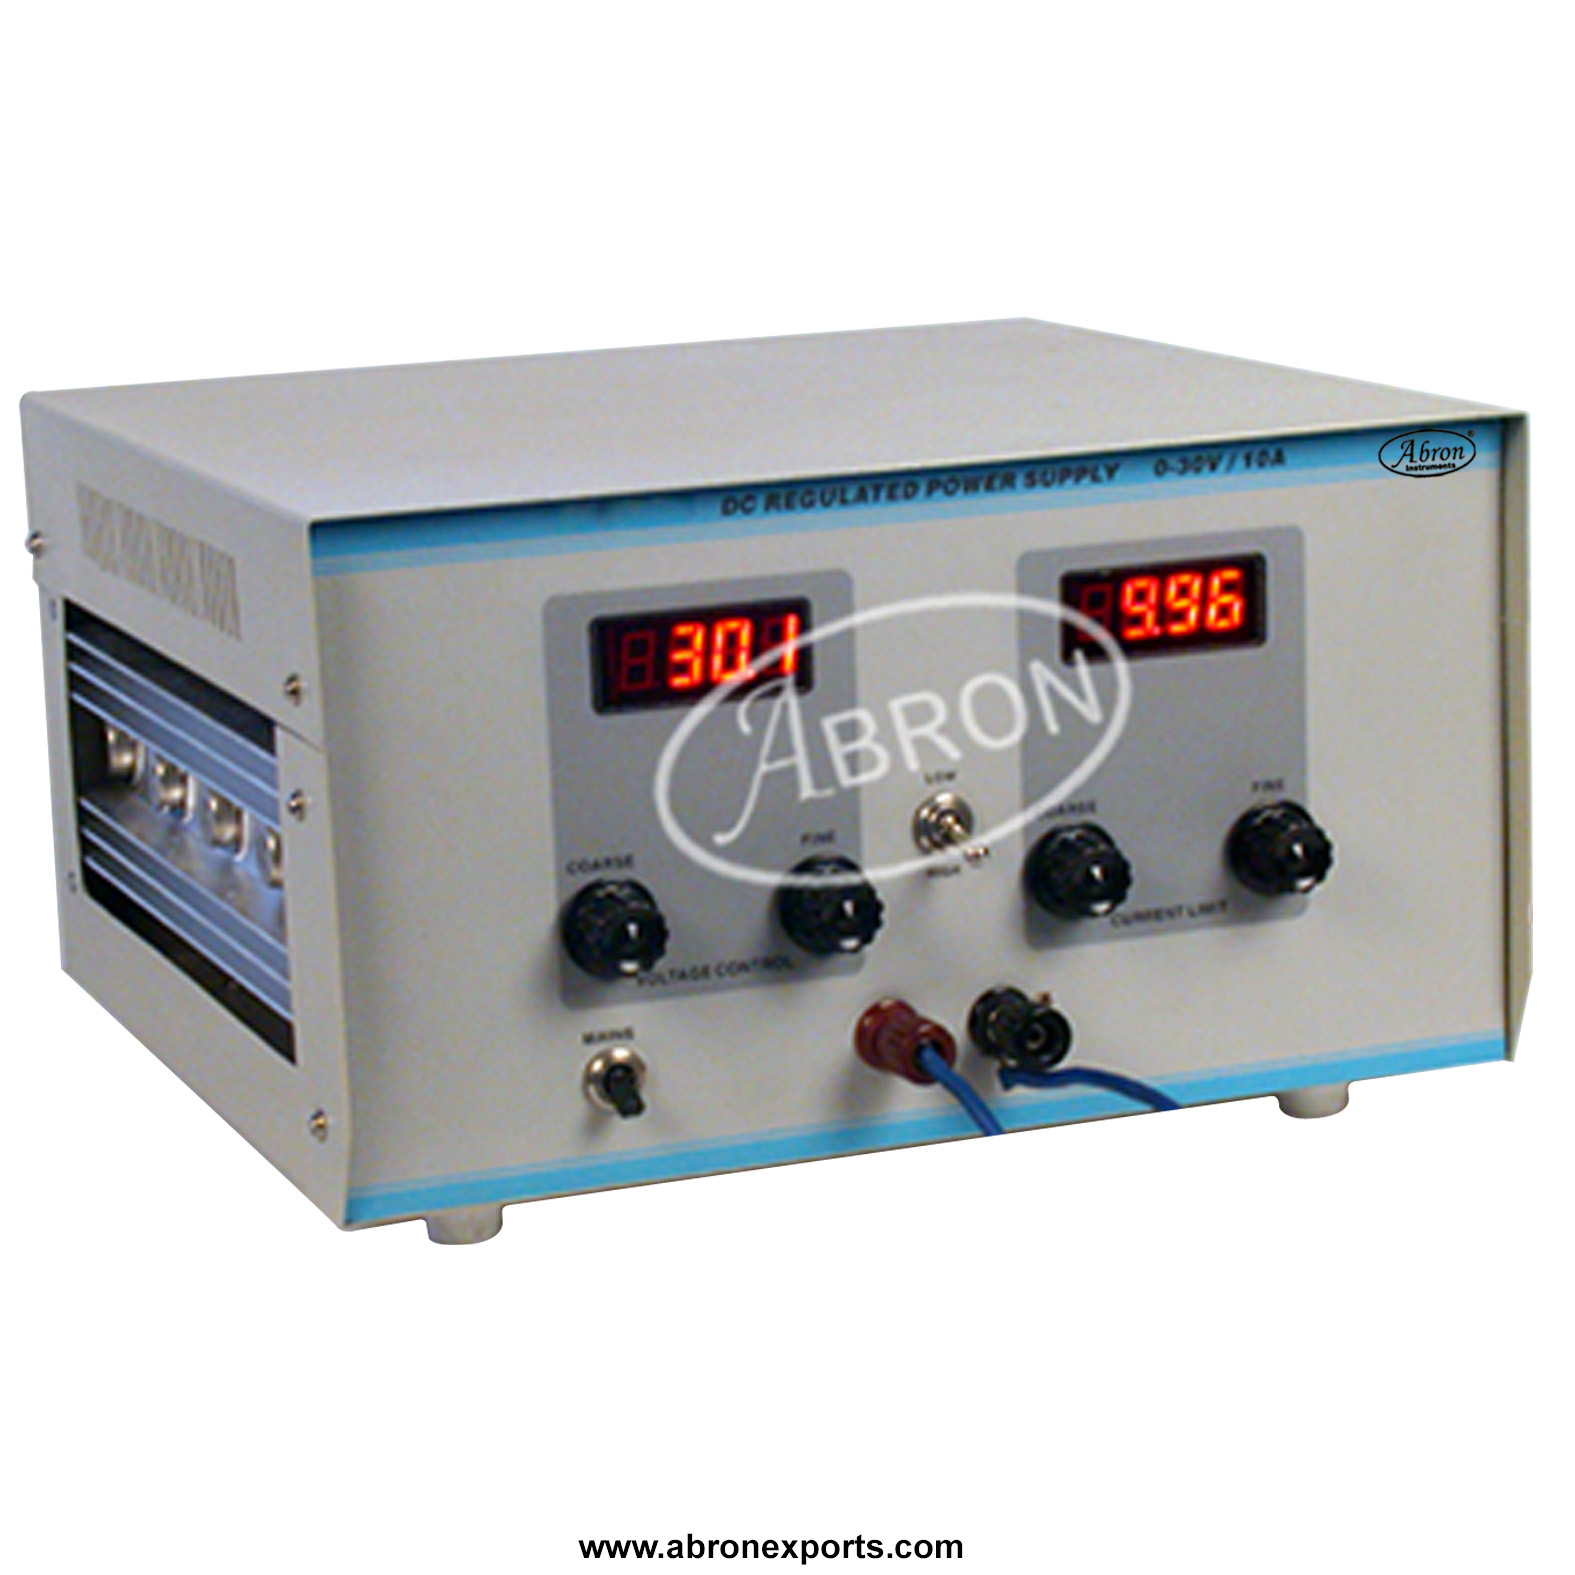 Power supply digital dc regulated 0-30v abron AE-1377B